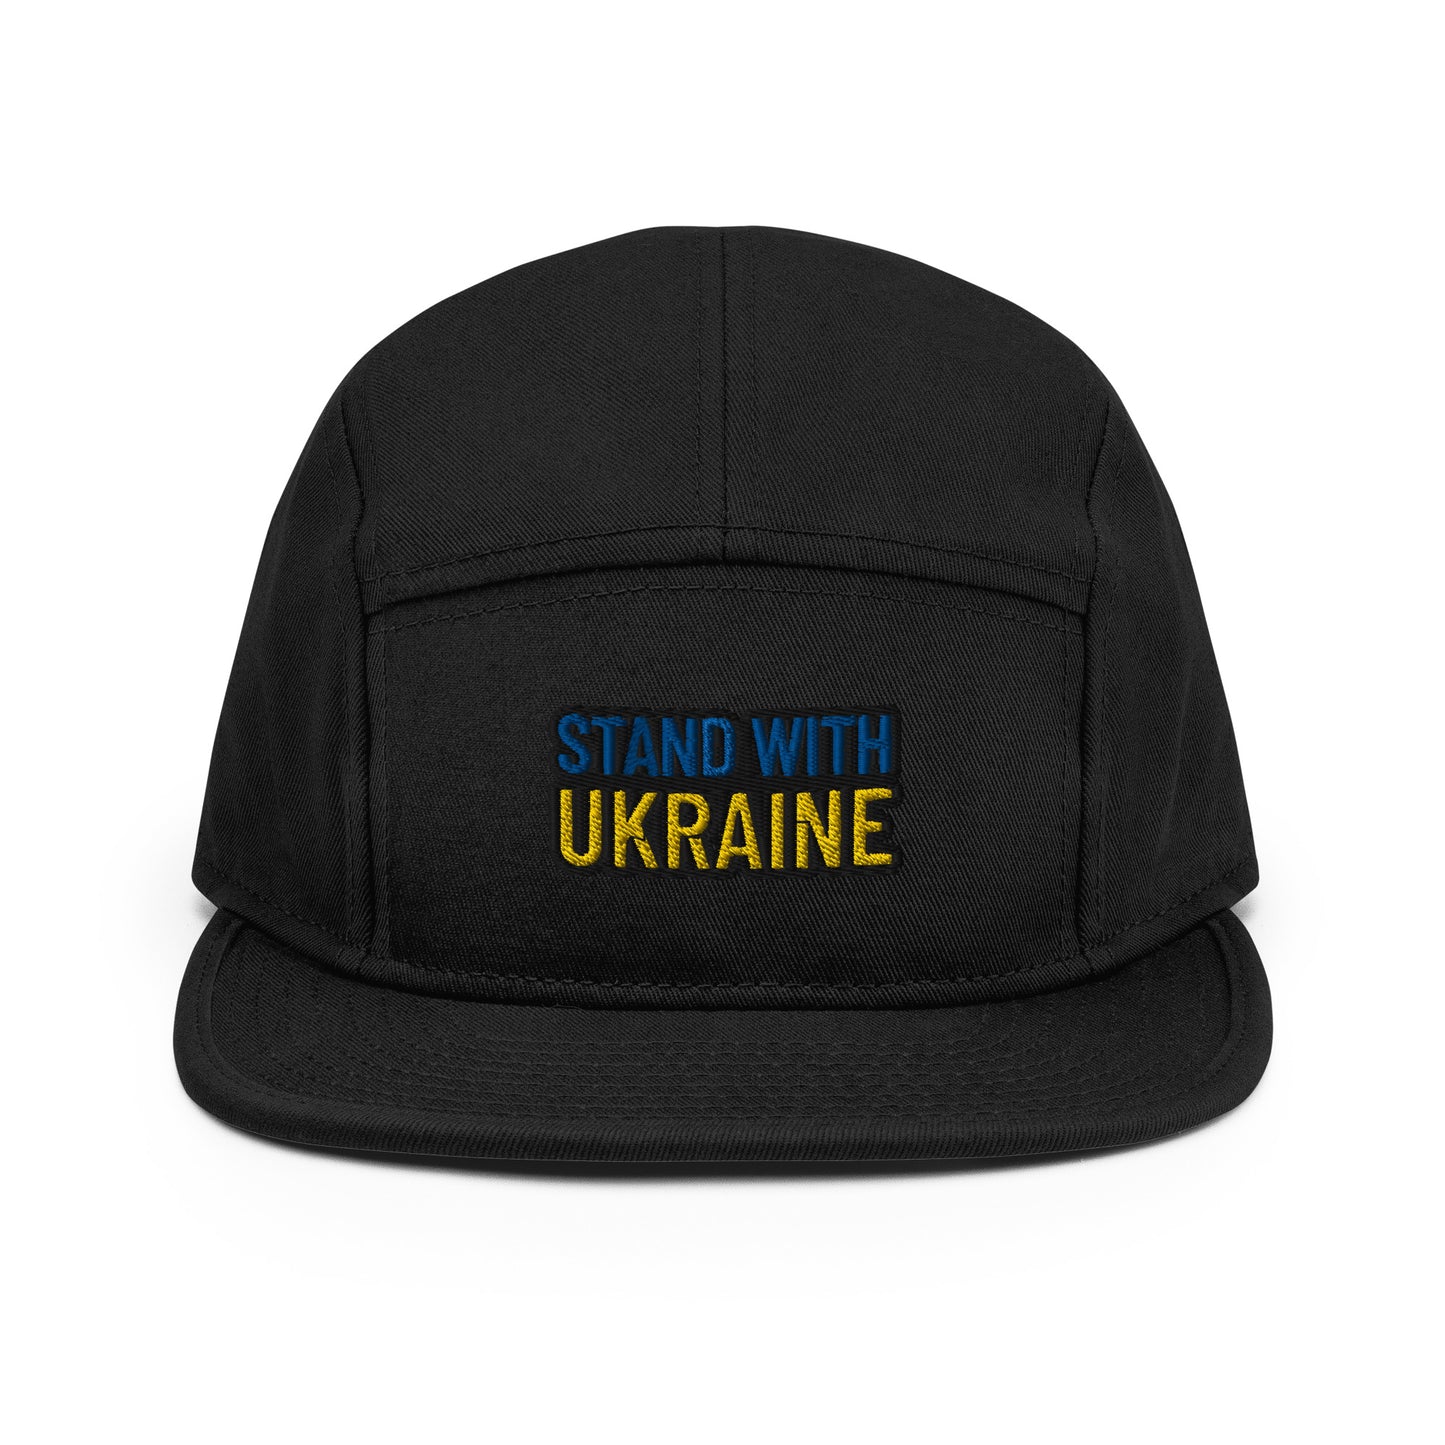 Caballete Camper 5 Paneles con ucrania